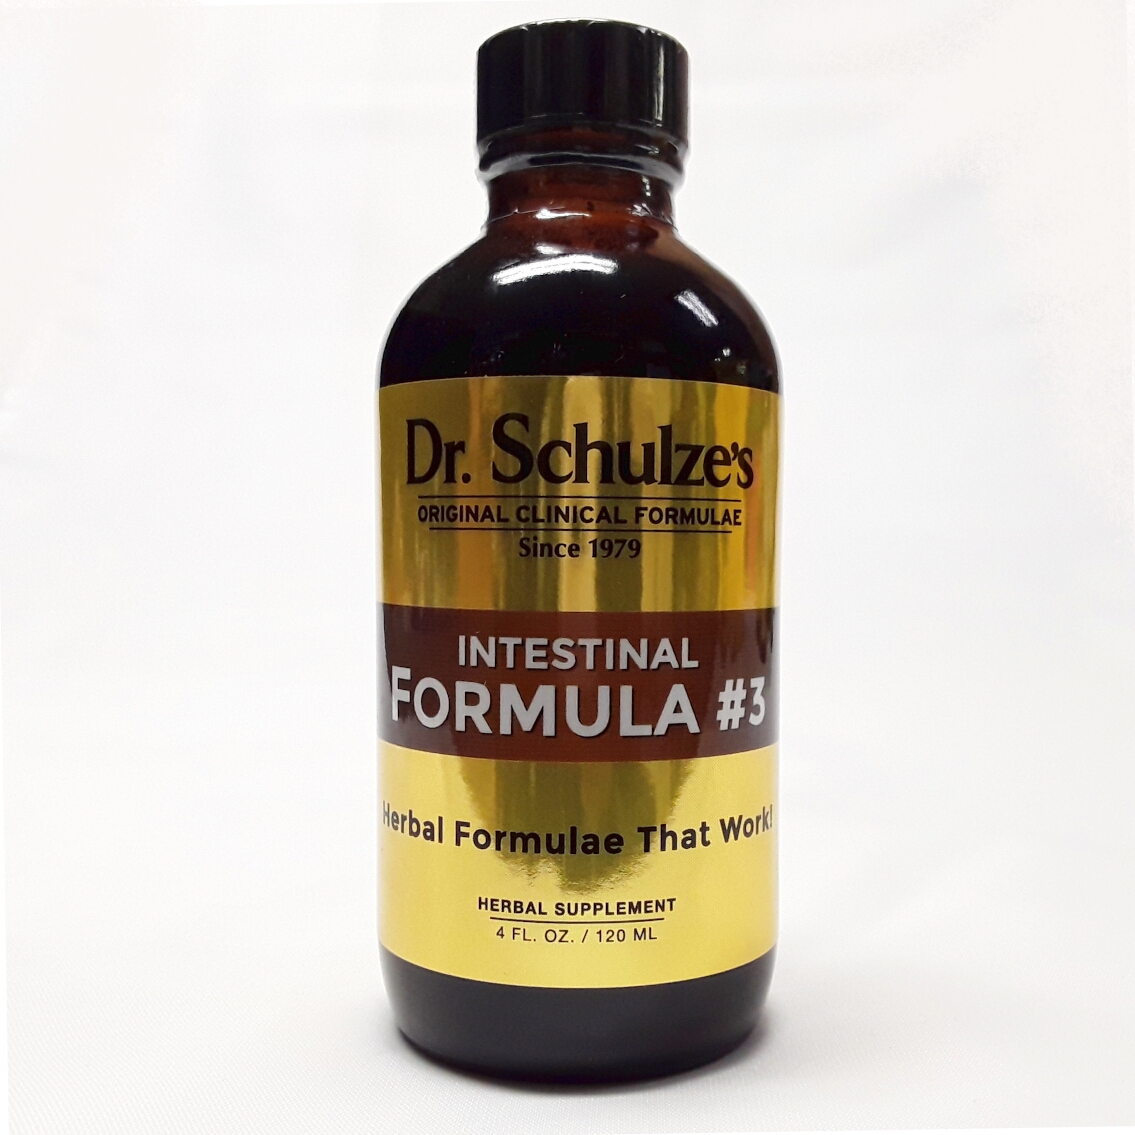 Dr Schulzes Intestinal Formula 3 Website Product Image View (1)